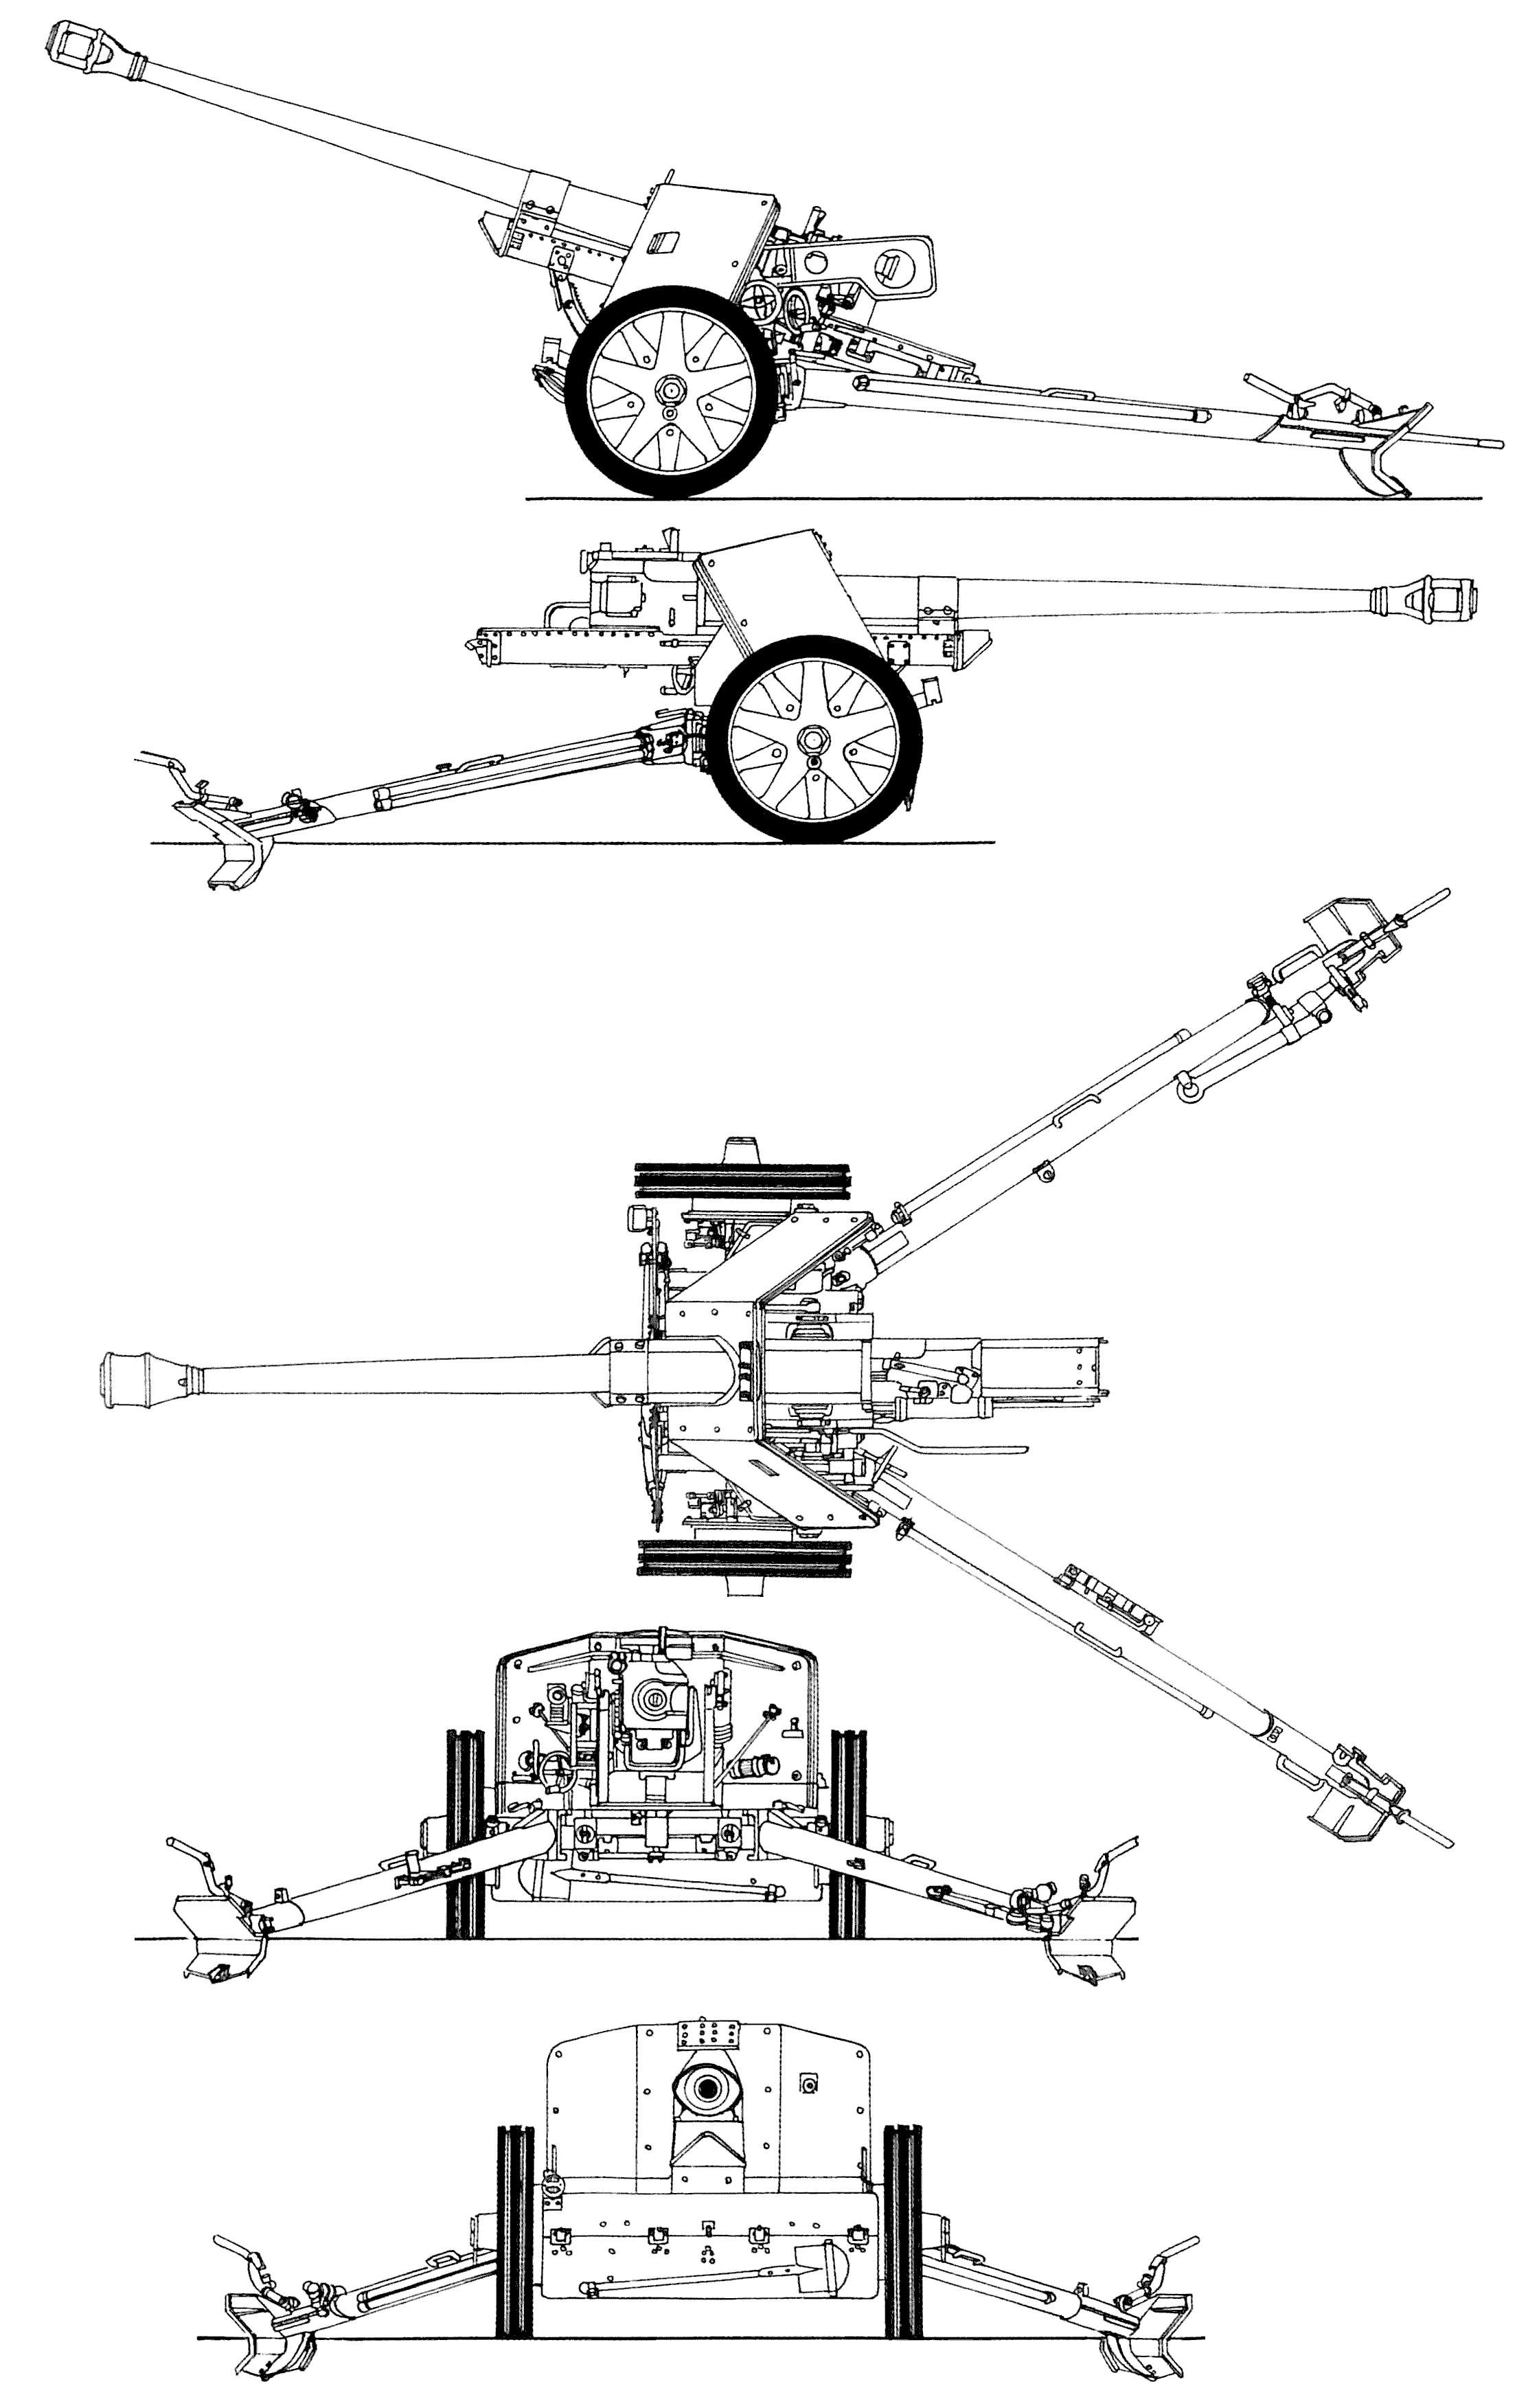 7.5 cm Pak 40 blueprint